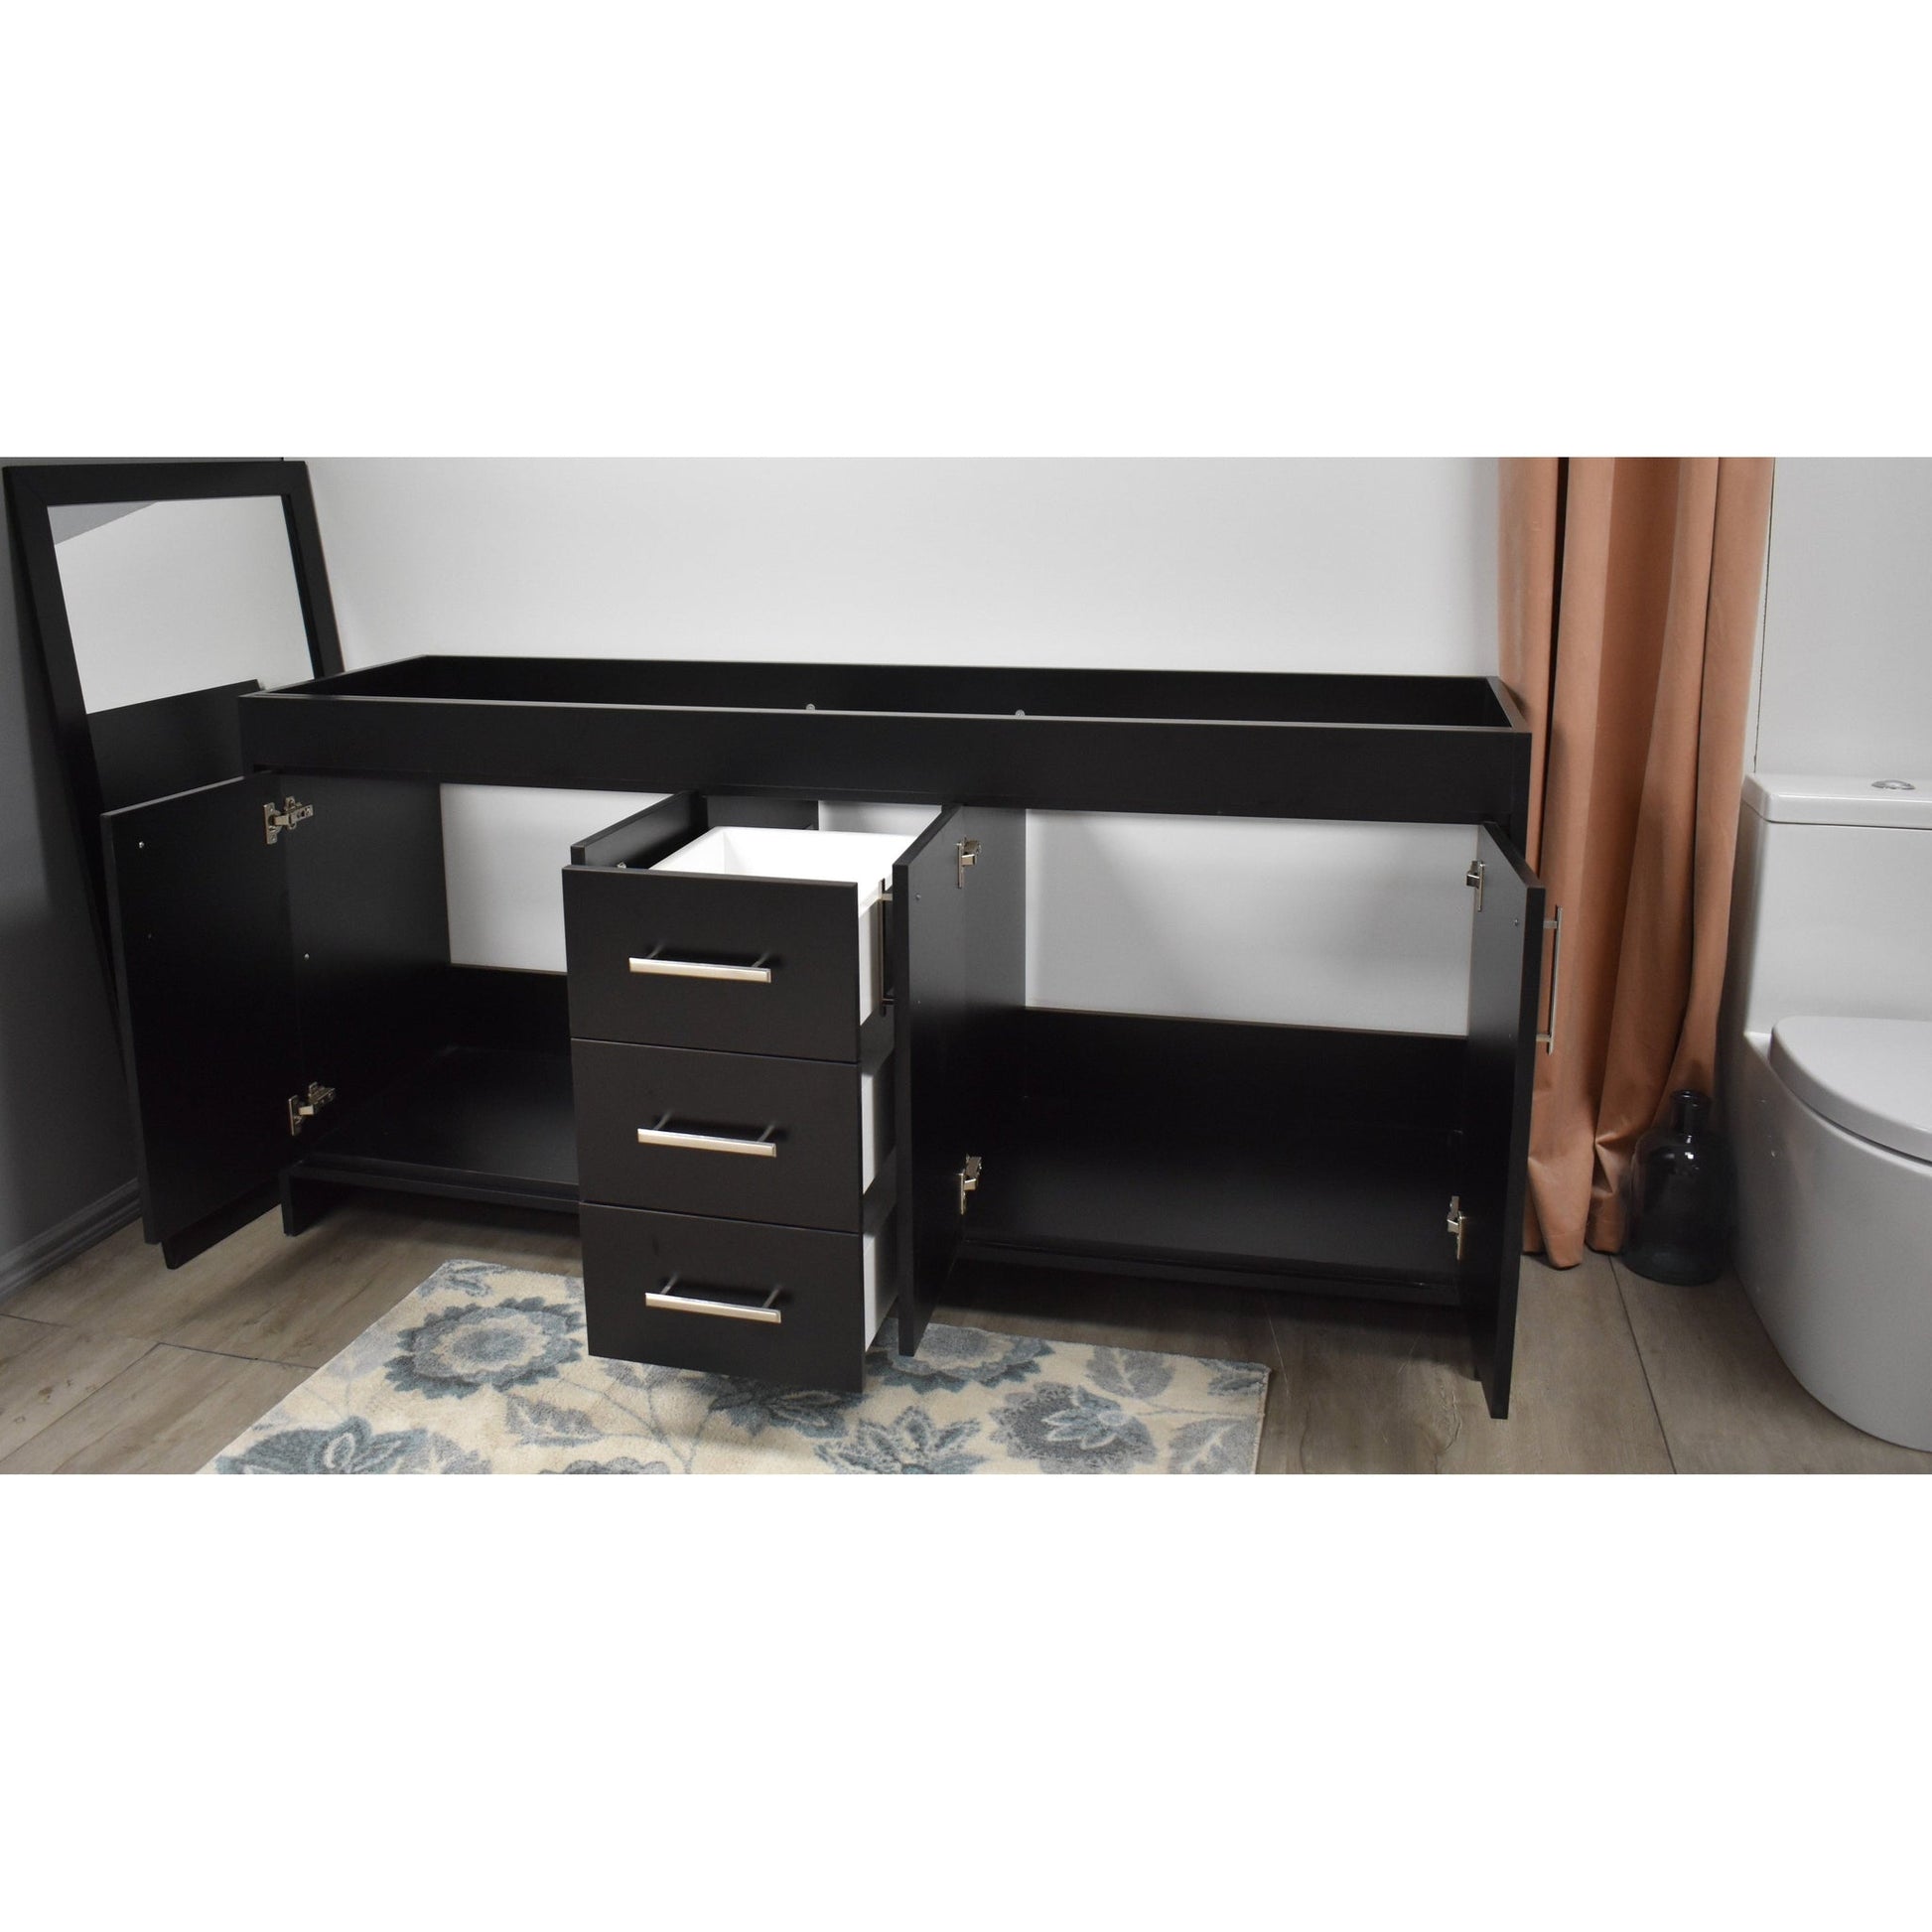 Volpa USA Capri 72" x 22" Black Modern Bathroom Vanity For Double Sinks With Brushed Nickel Edge Handles